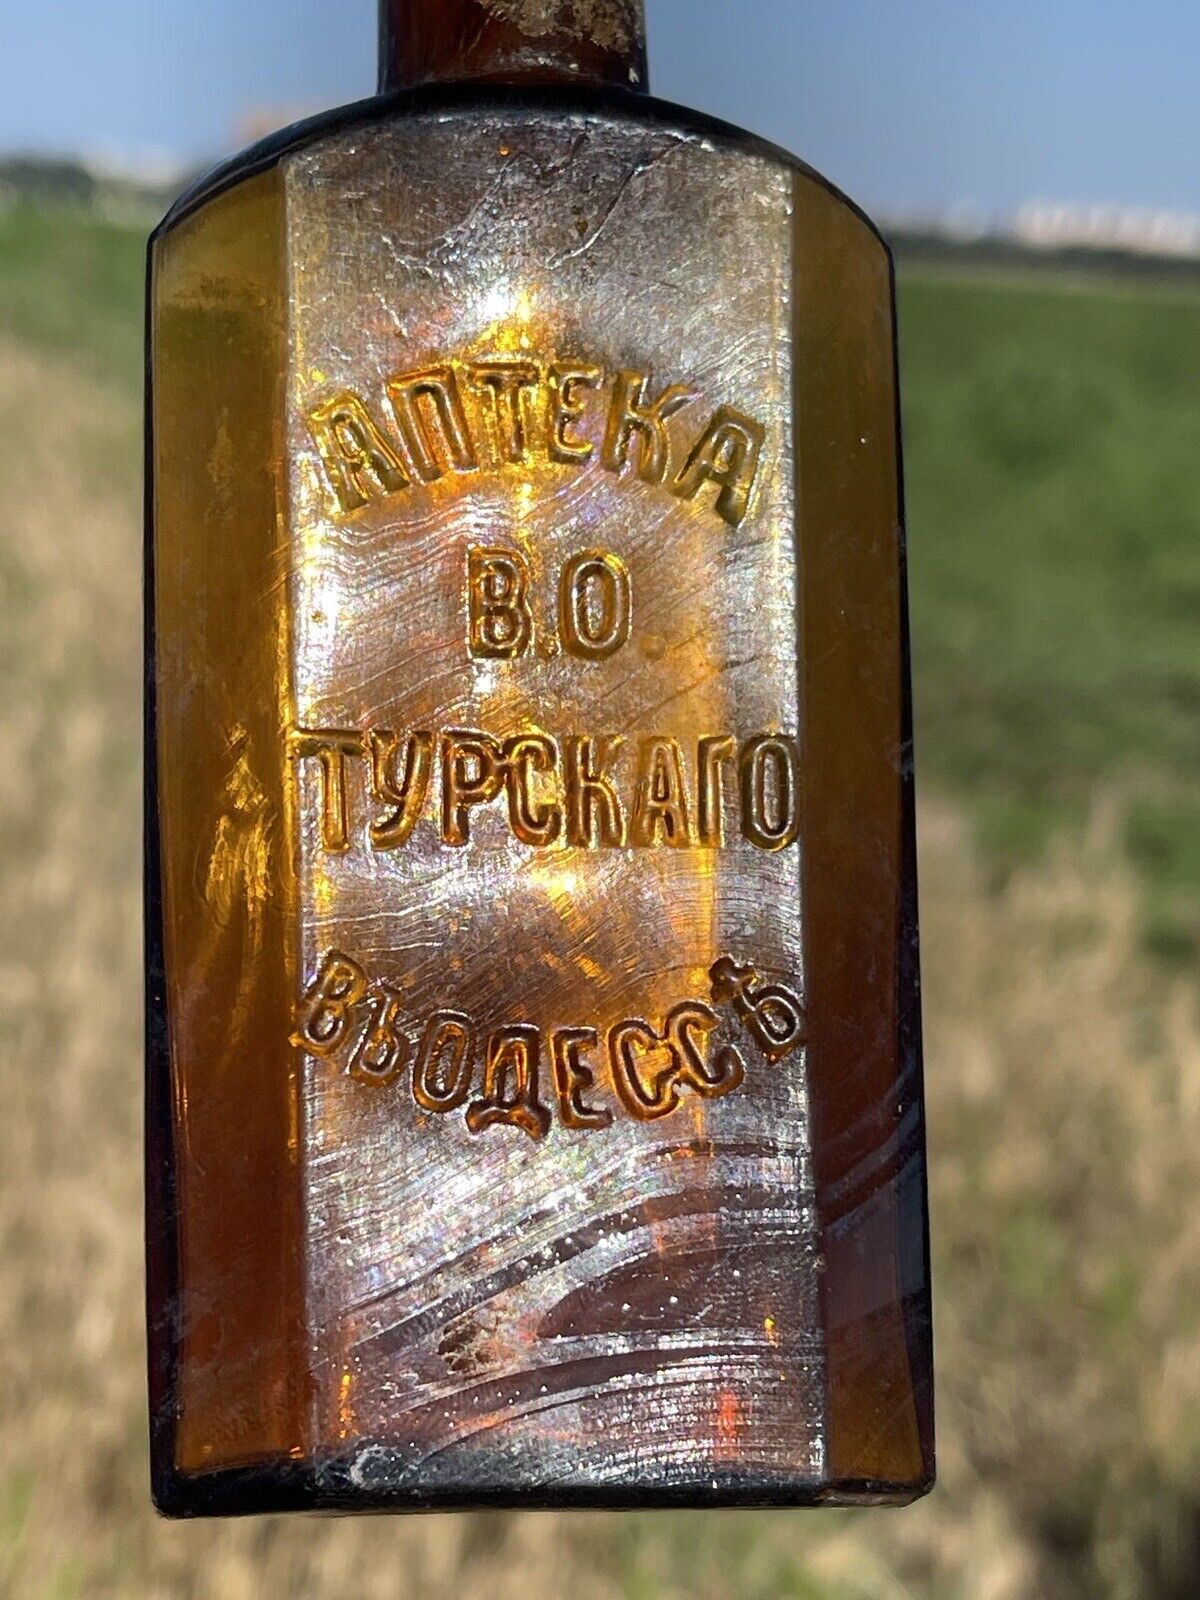 Very Rare Antique 1896-1916s  bottle from the Czars era Pharmacy V.O. Turskago